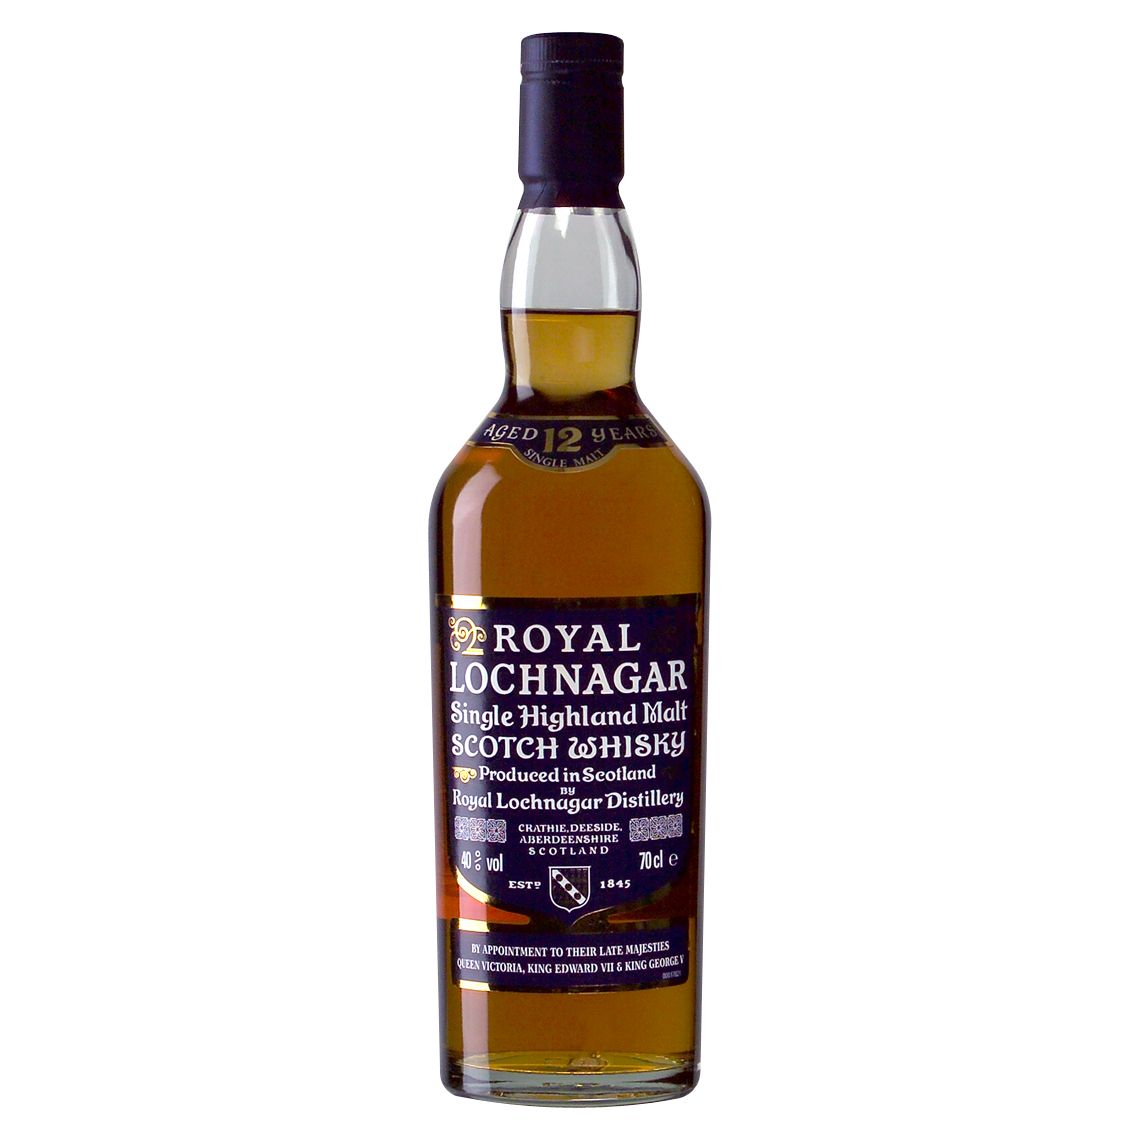 Royal Lochnagar 12-Year-Old Highland Malt Whisky at John Lewis